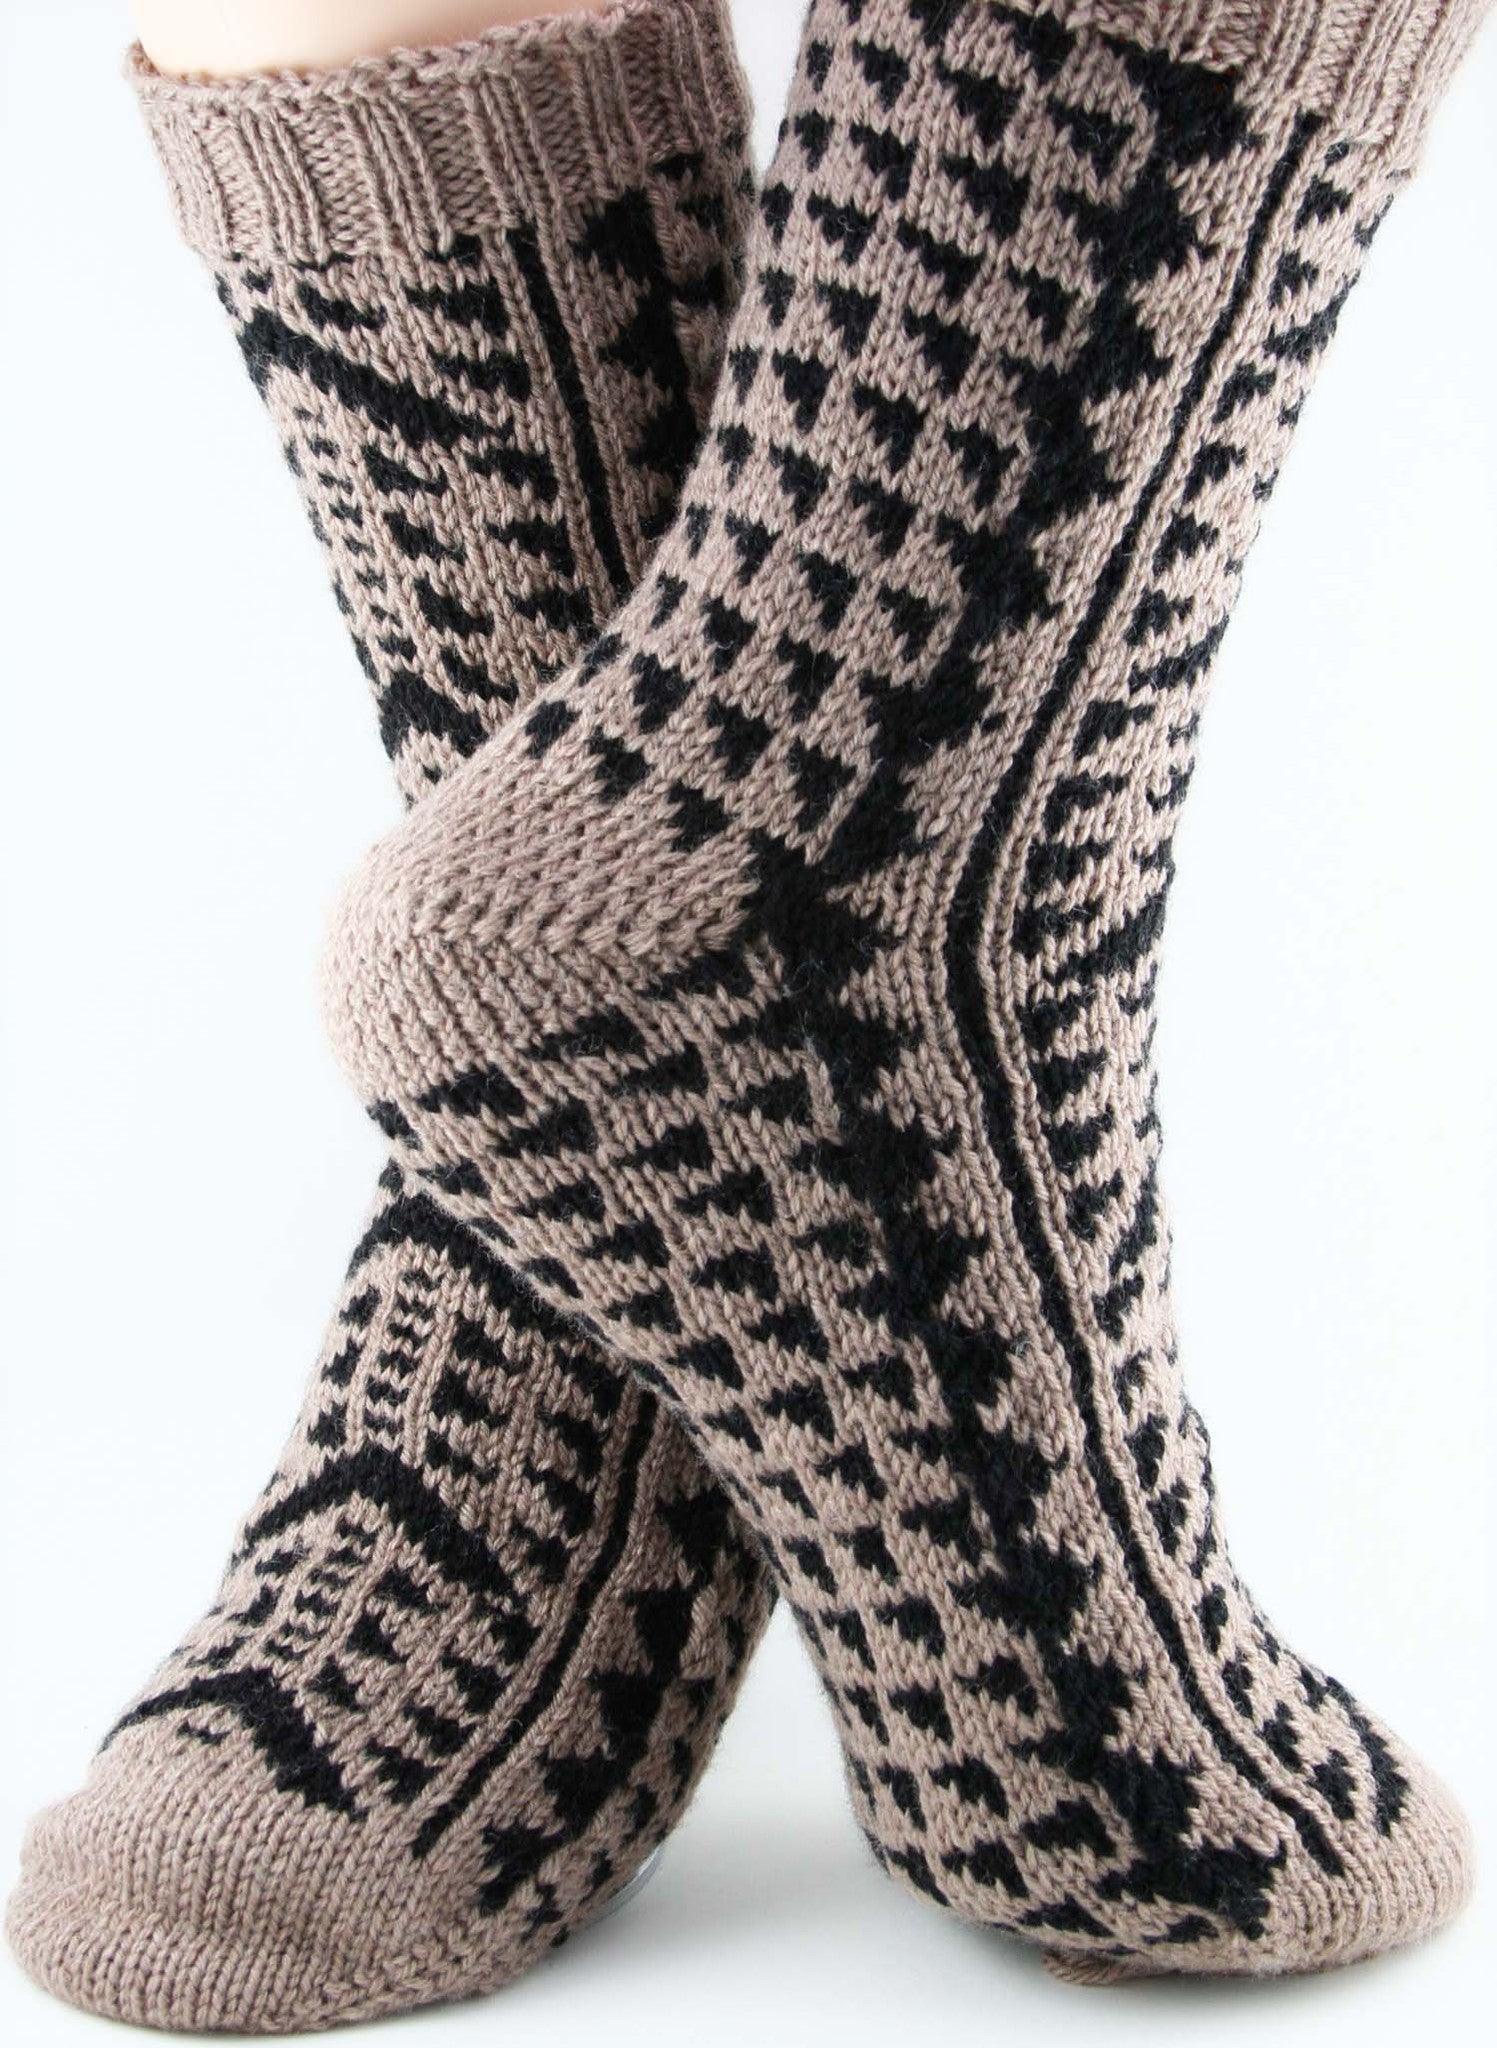 KNITTING PATTERN for Kane Socks -  Charted Colorwork Sock pattern - digital download